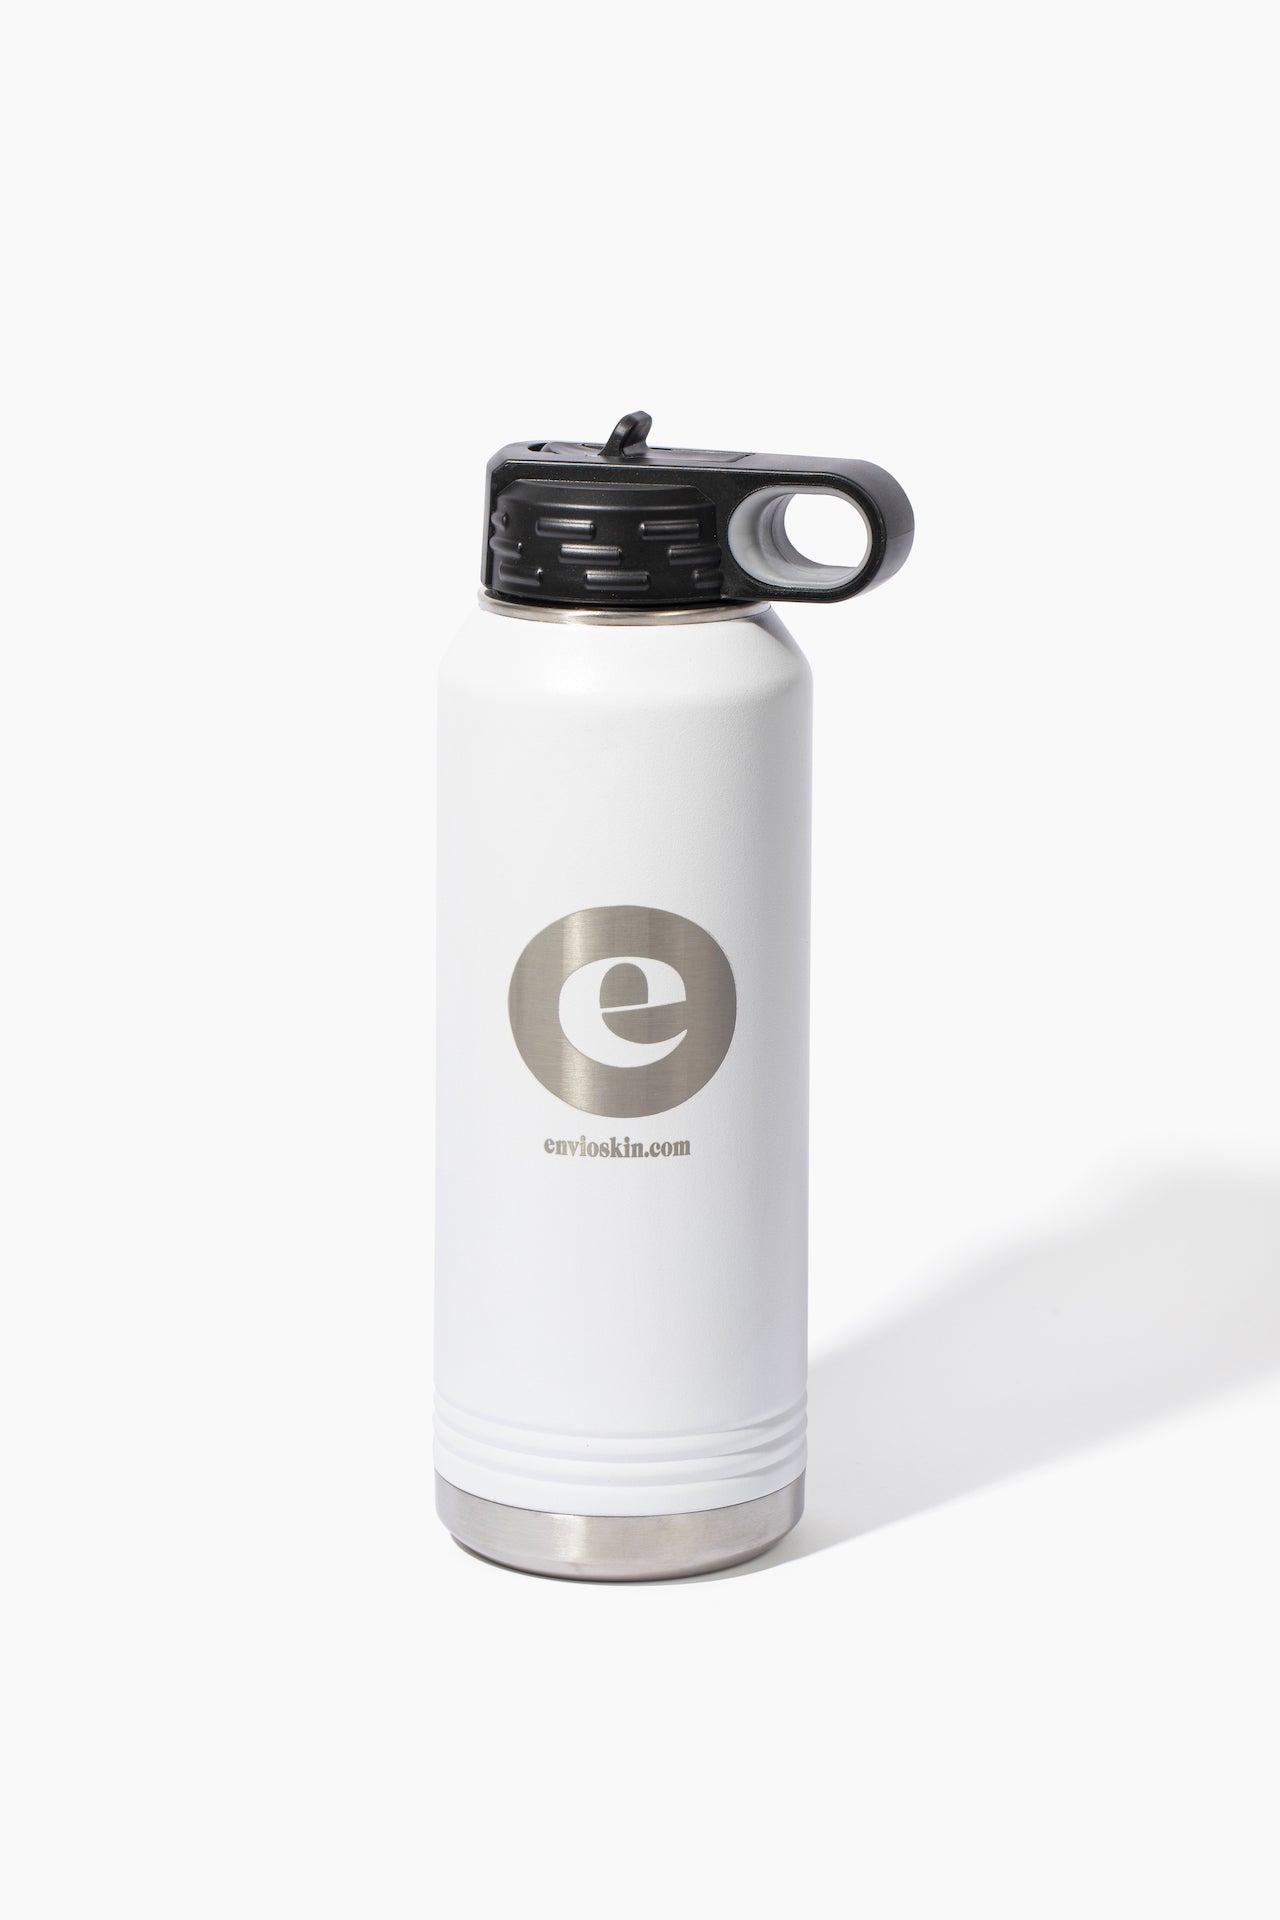 Sports Insulated Water Bottle - envioskin.com